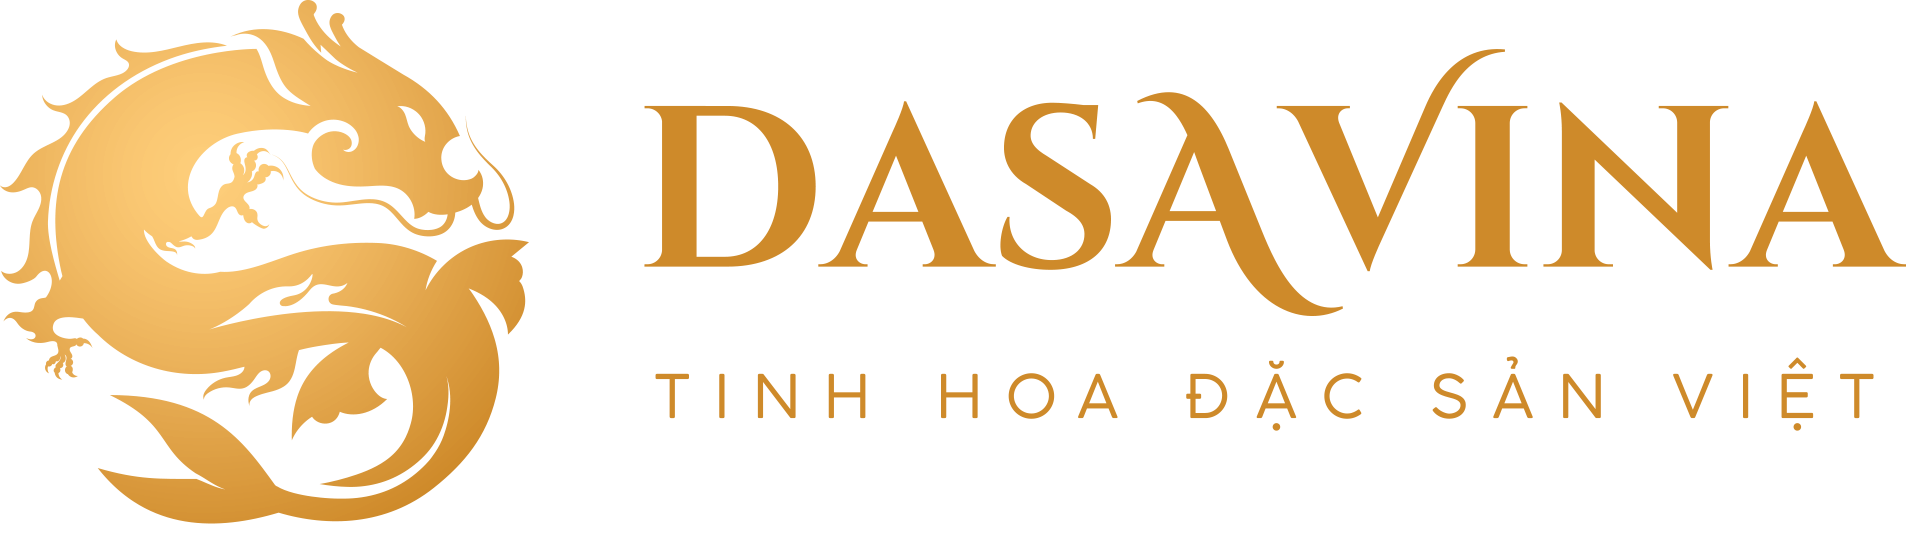 dasavina-logo